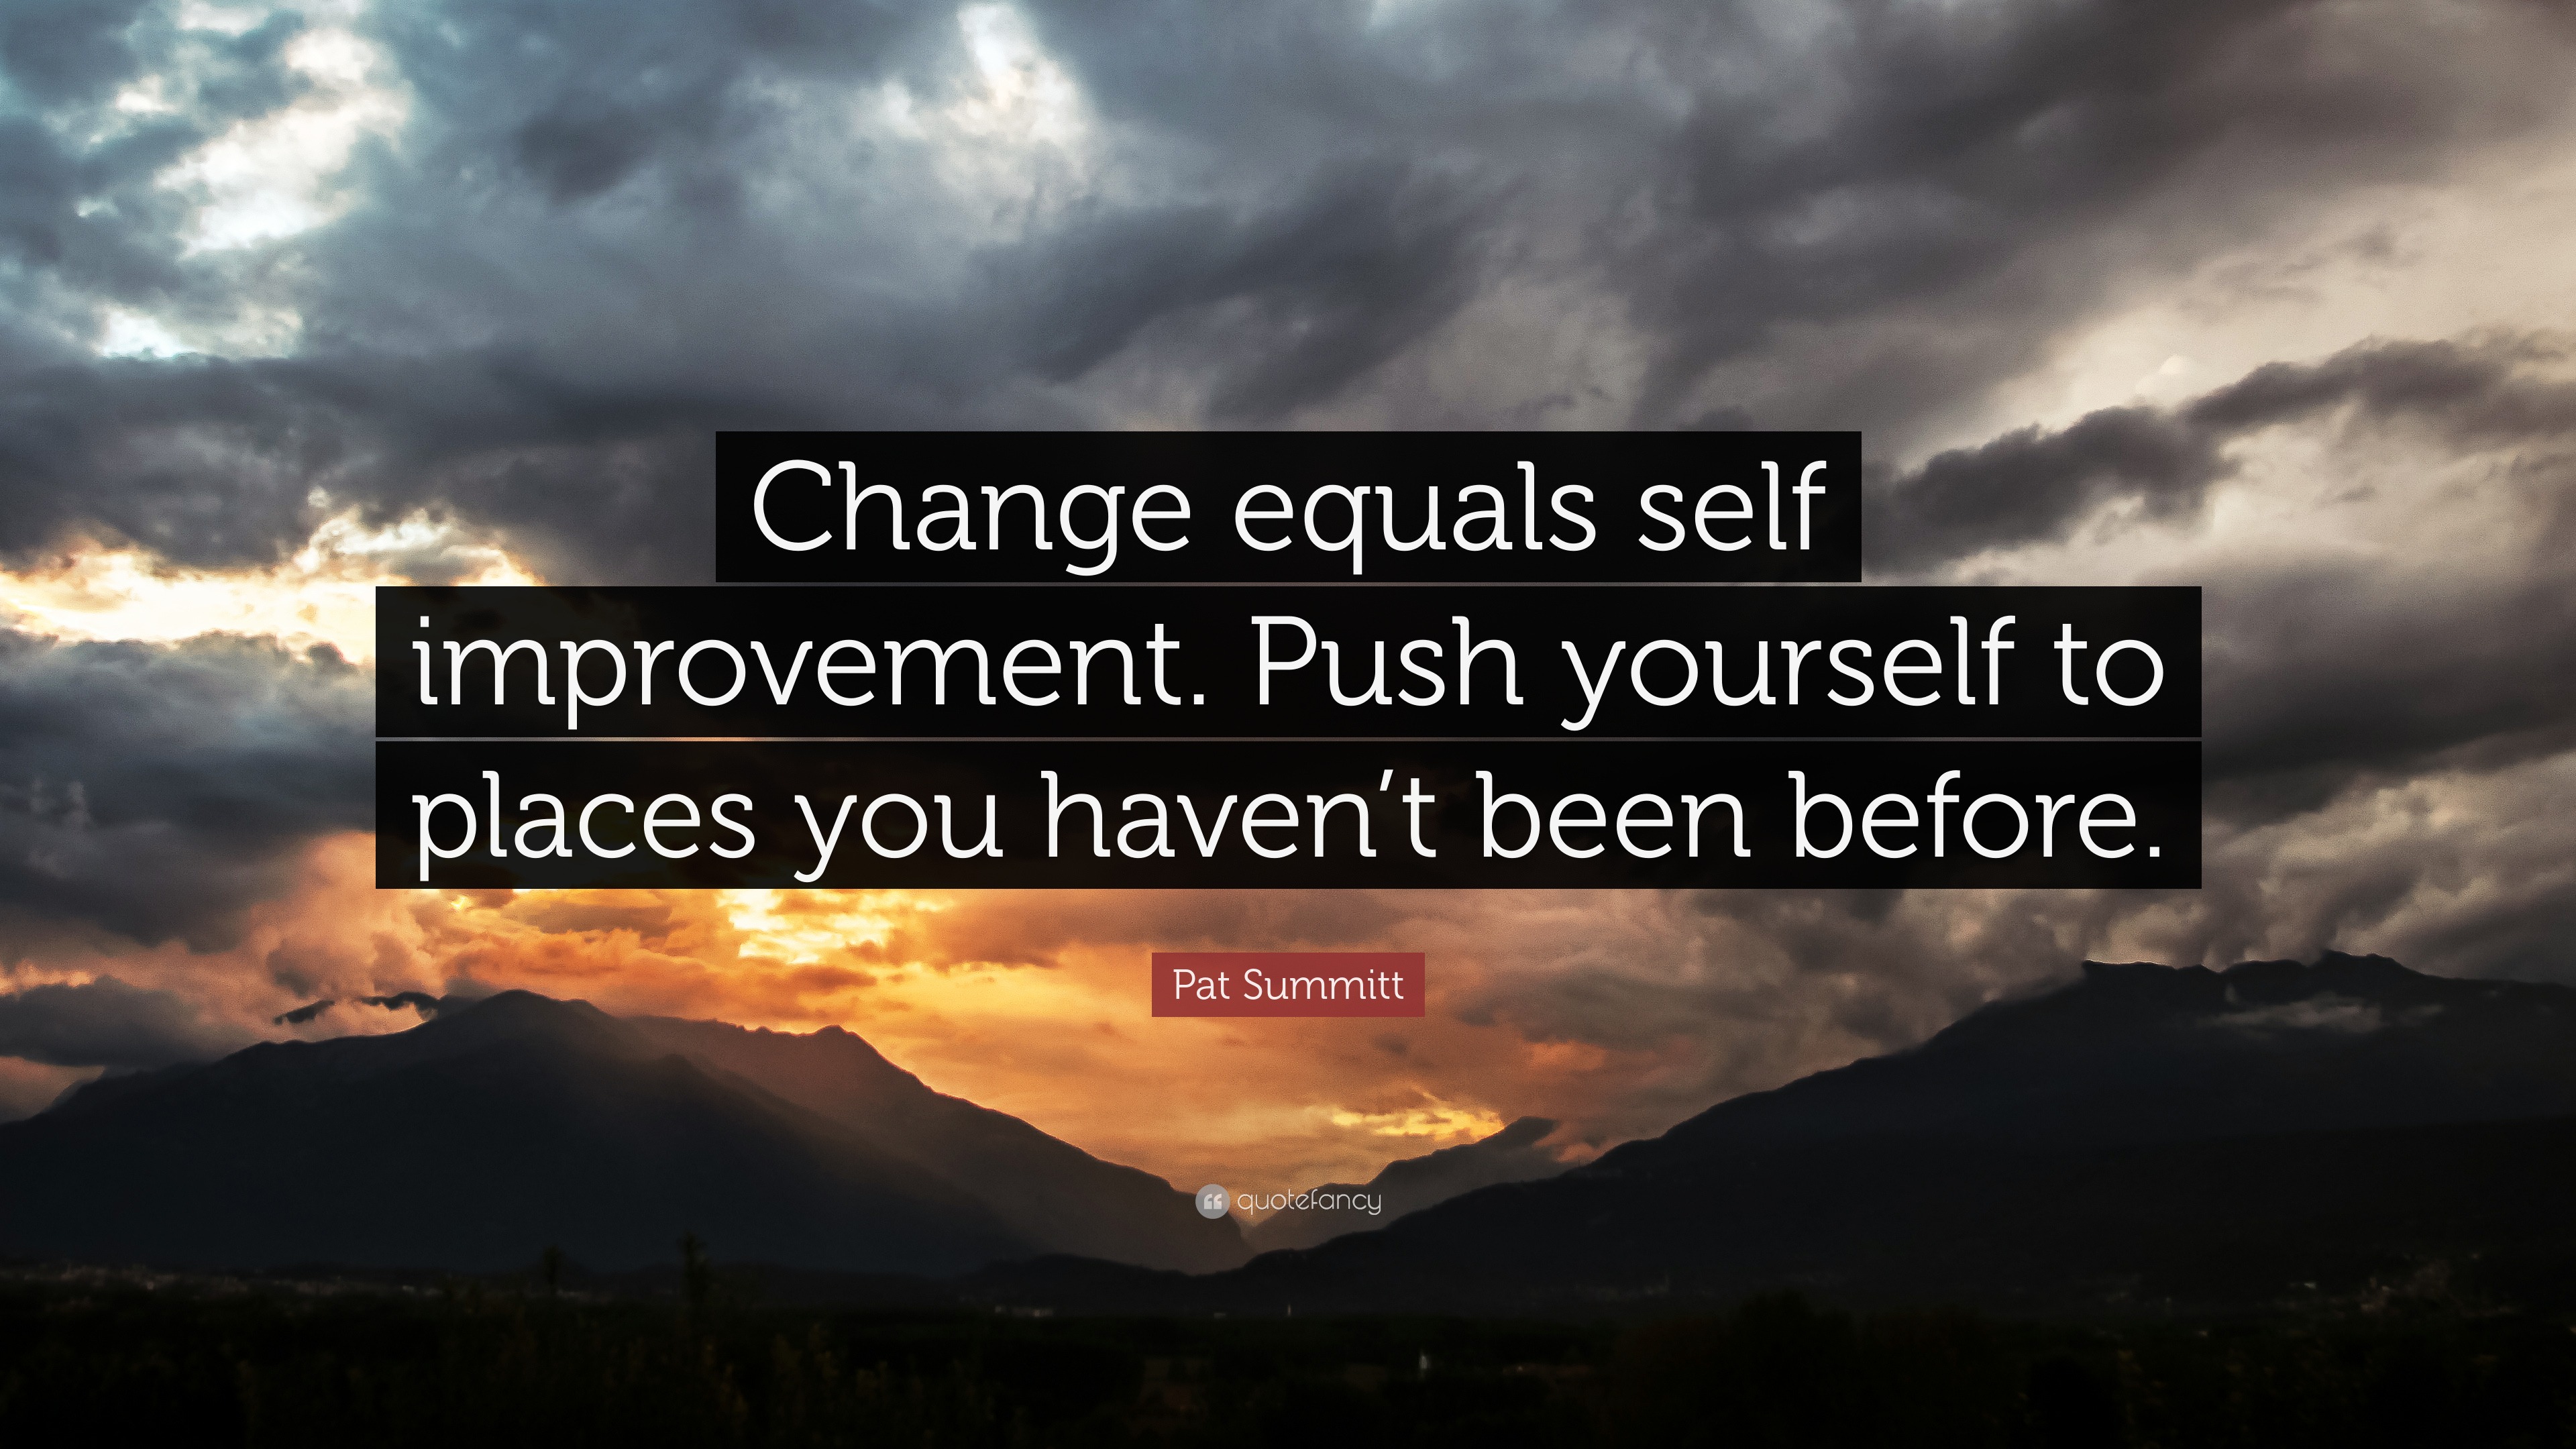 Pat Summitt Quote “Change equals self improvement. Push